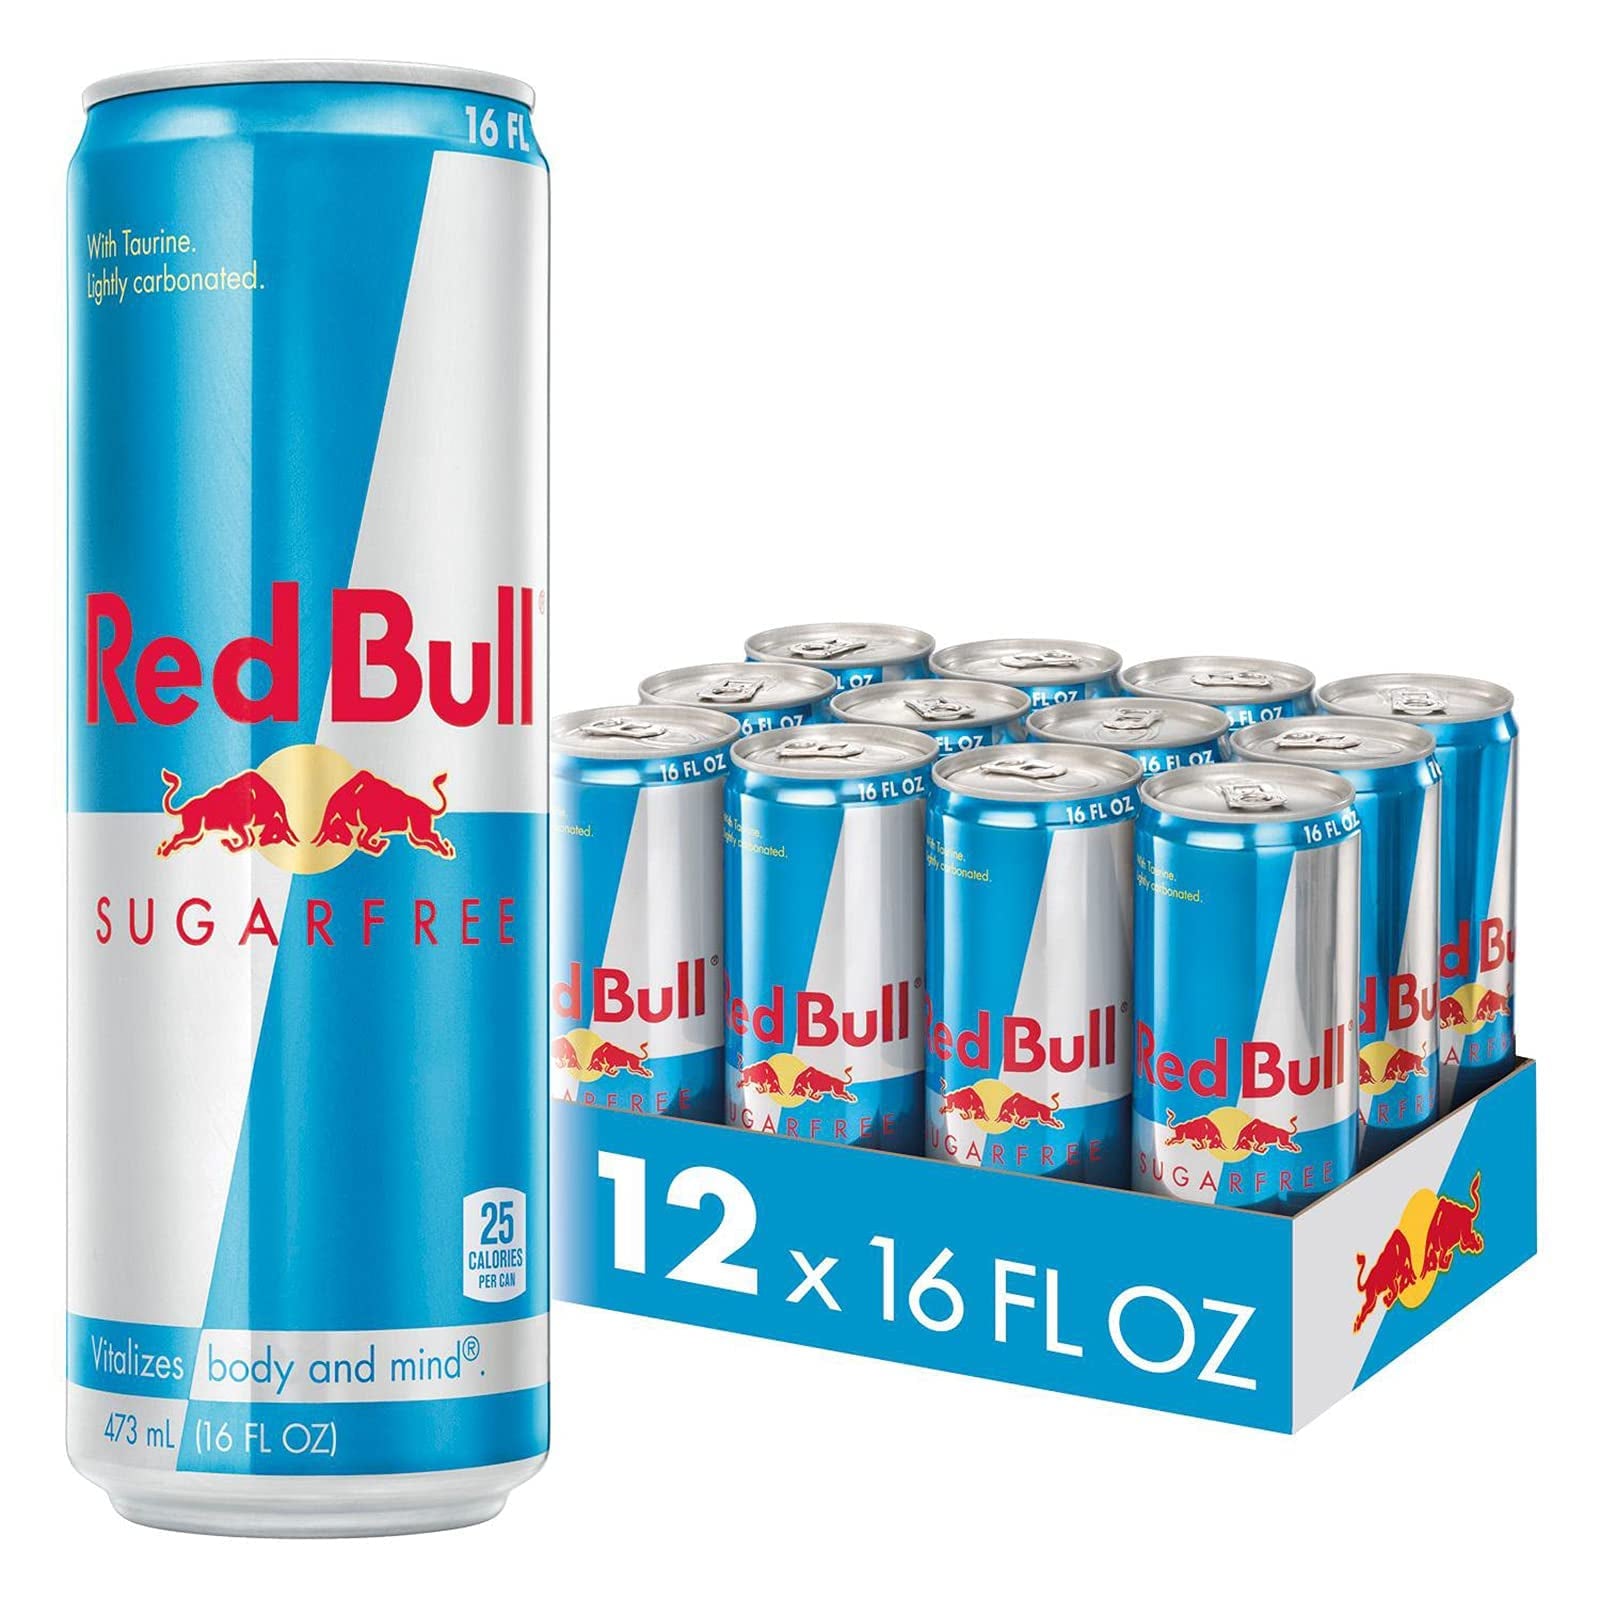 Red Bull Sugar Free 16oz 12 Count